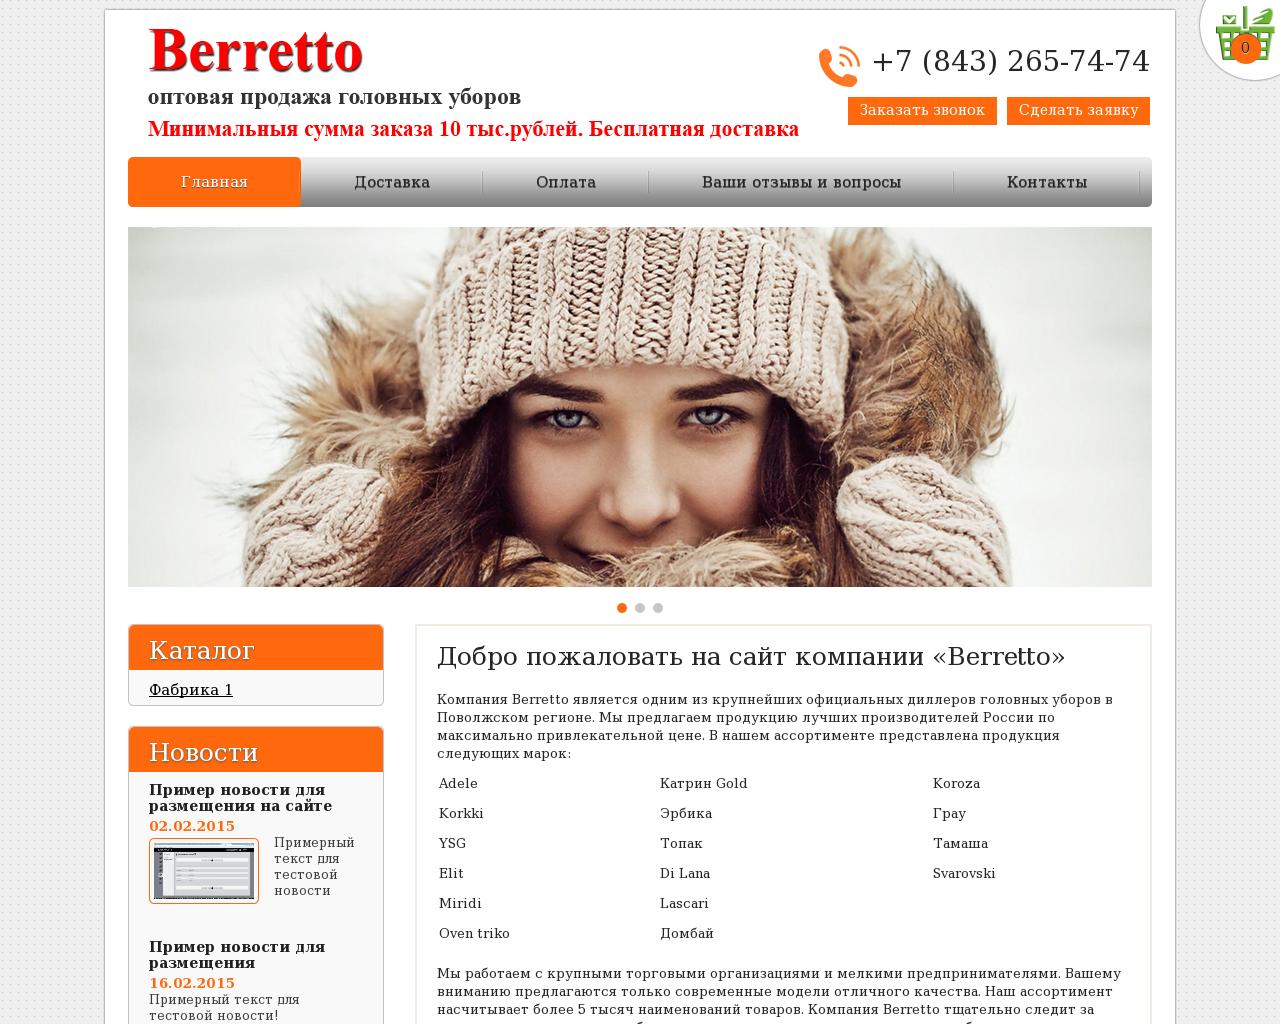 Изображение сайта berretto.ru в разрешении 1280x1024